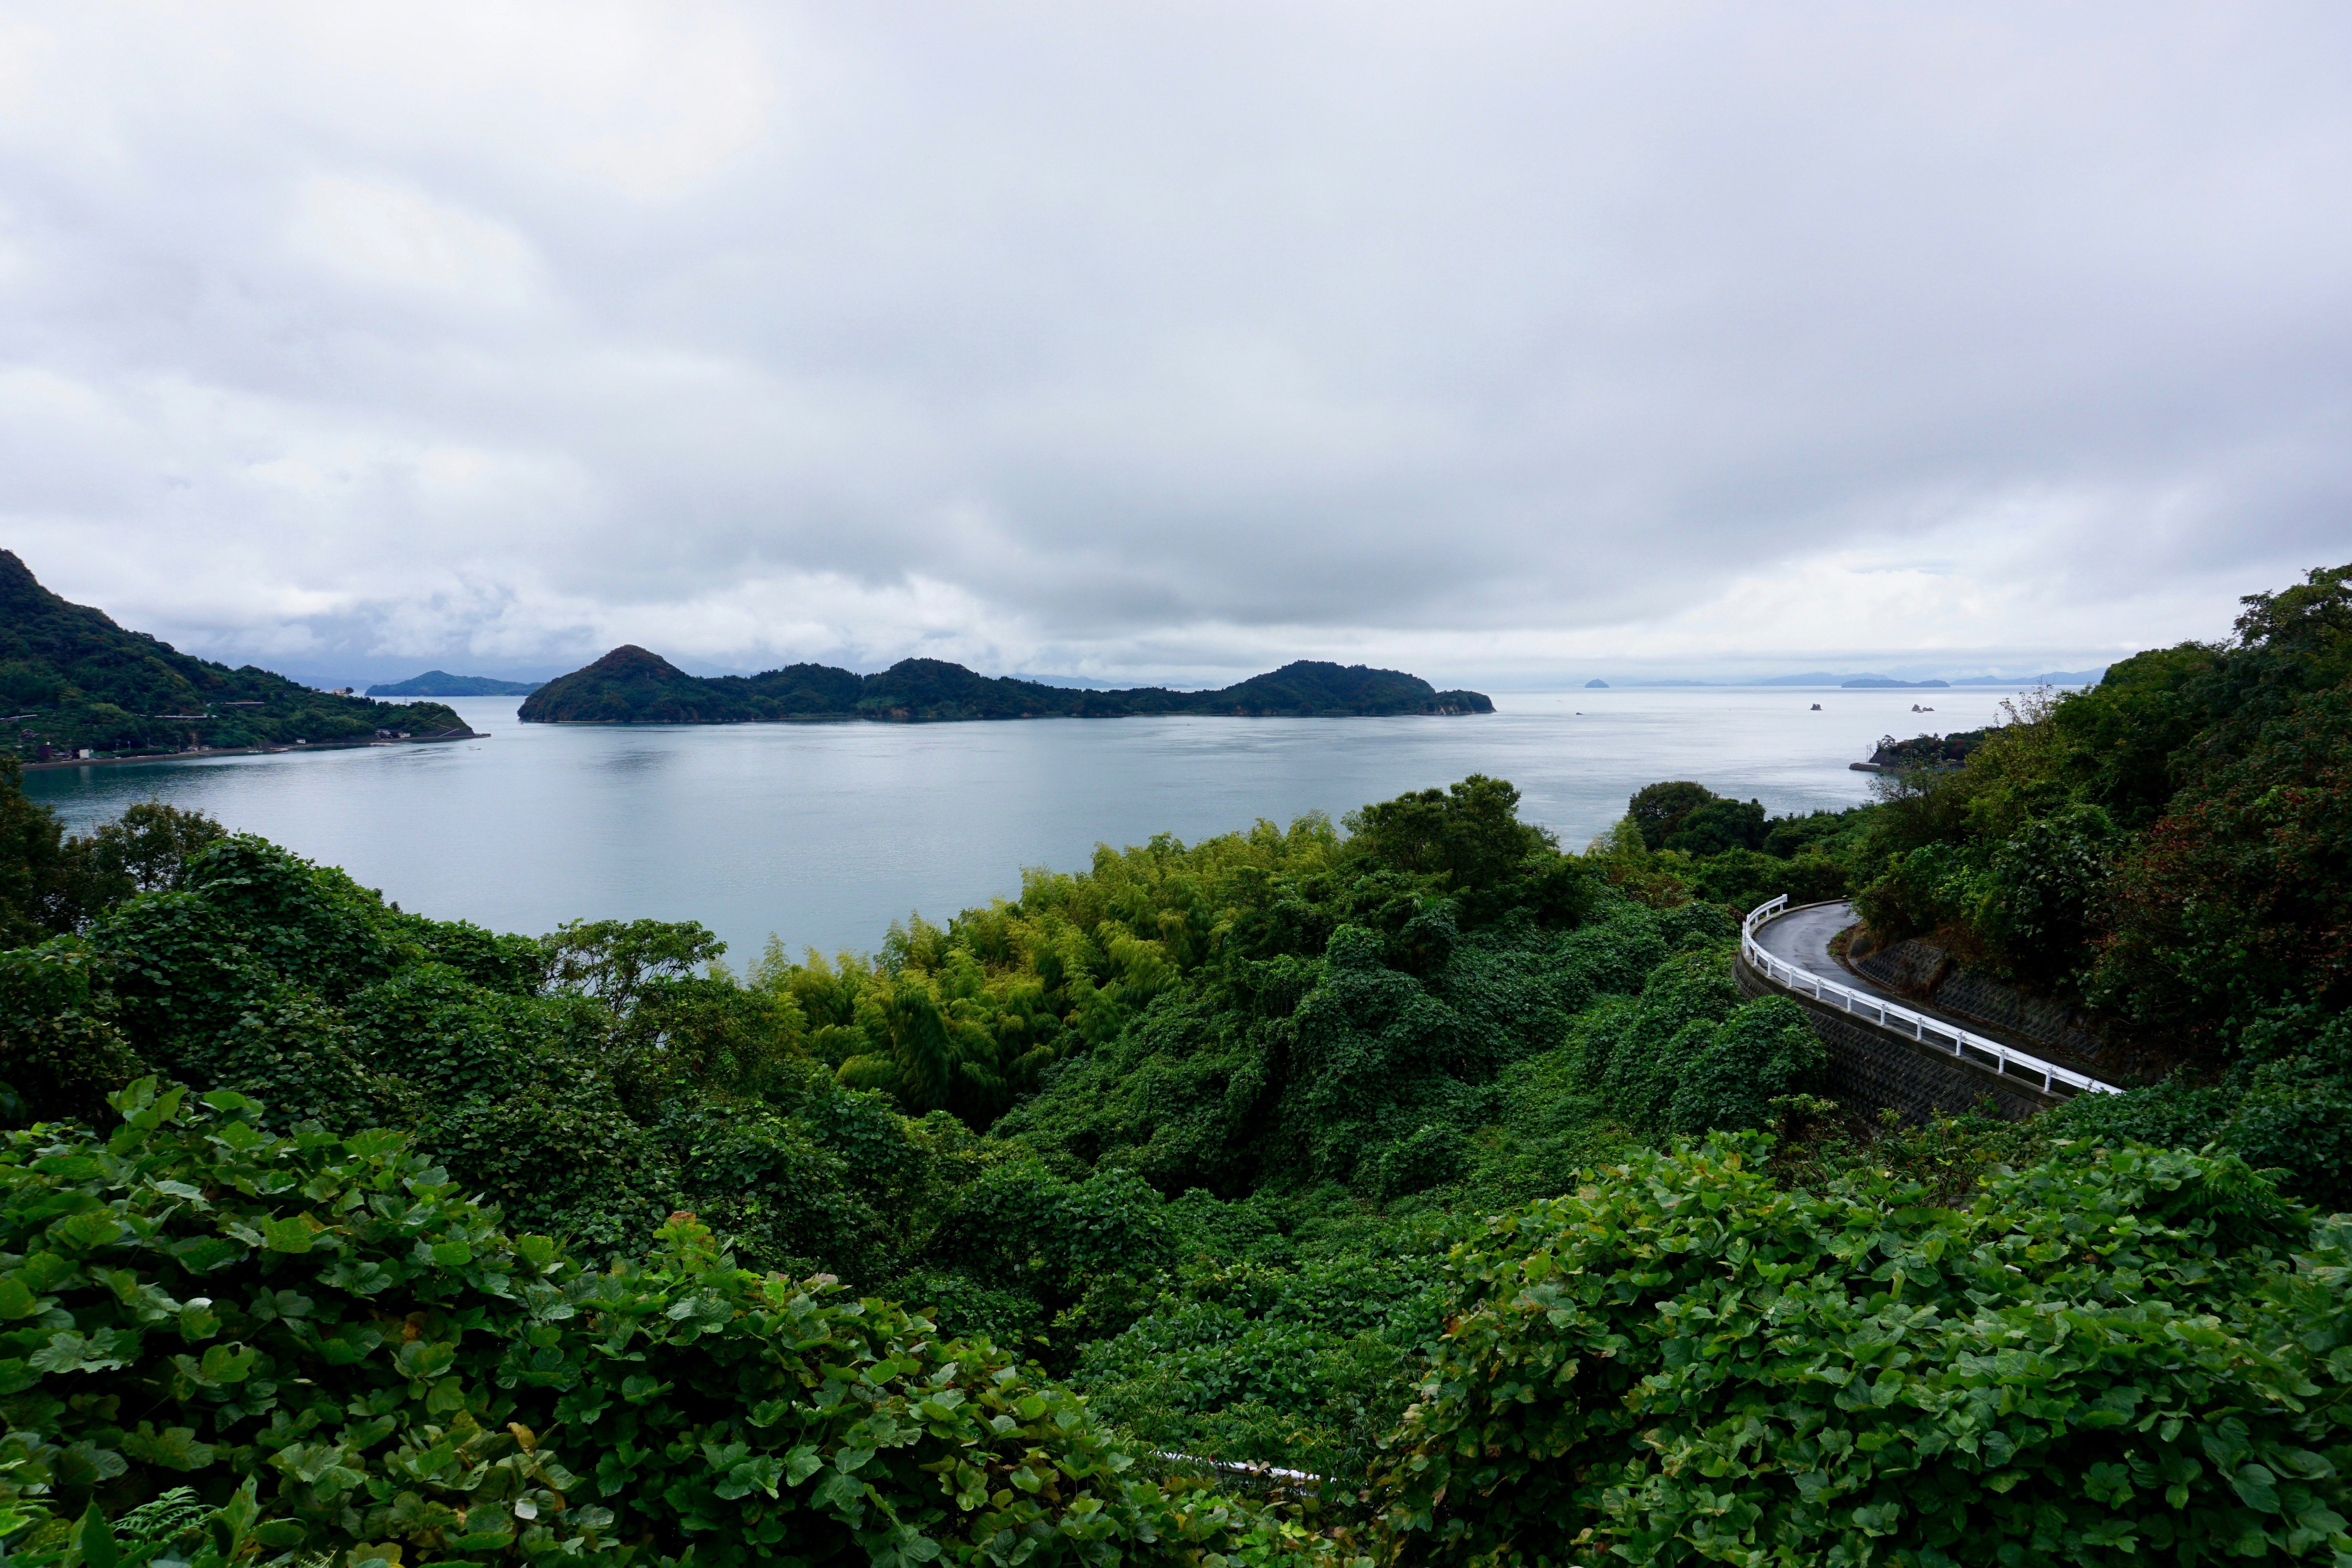 The Tobishima Kaido cycling trail cuts through thick green vegetation right on the coast of Japan's Seto Inland Sea